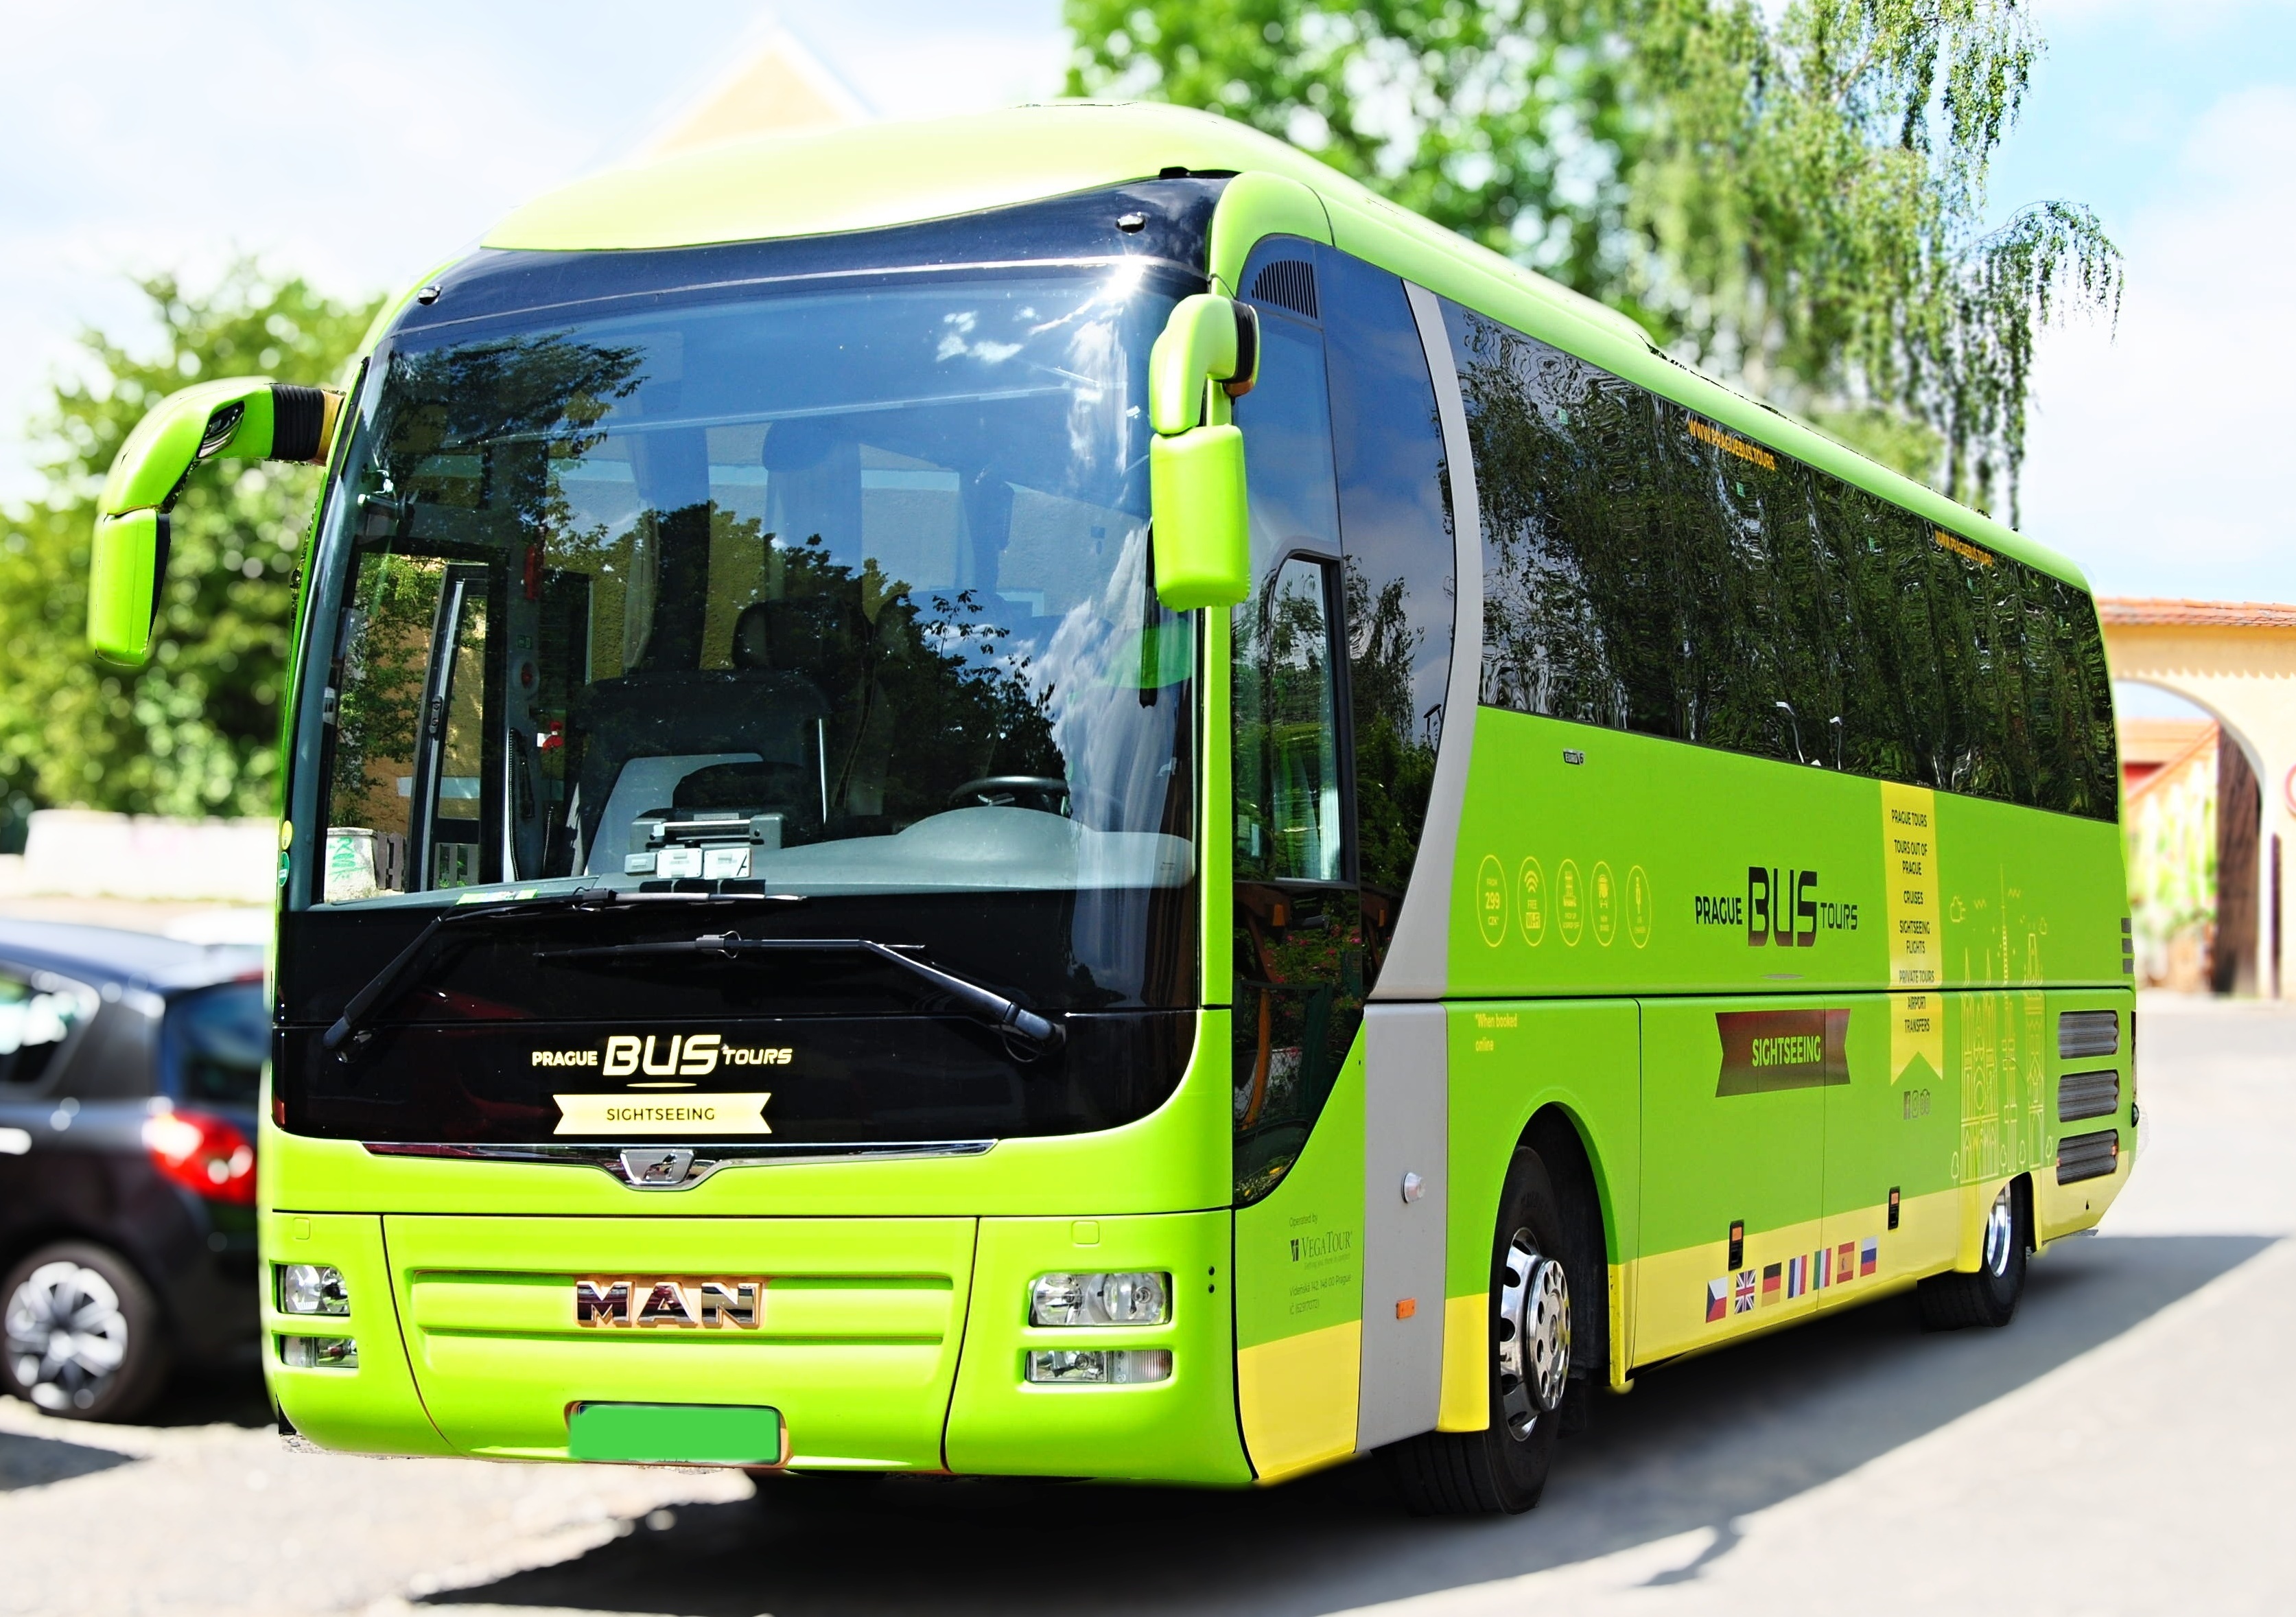 Tour of Karlovy Vary - Prague Bus Tours